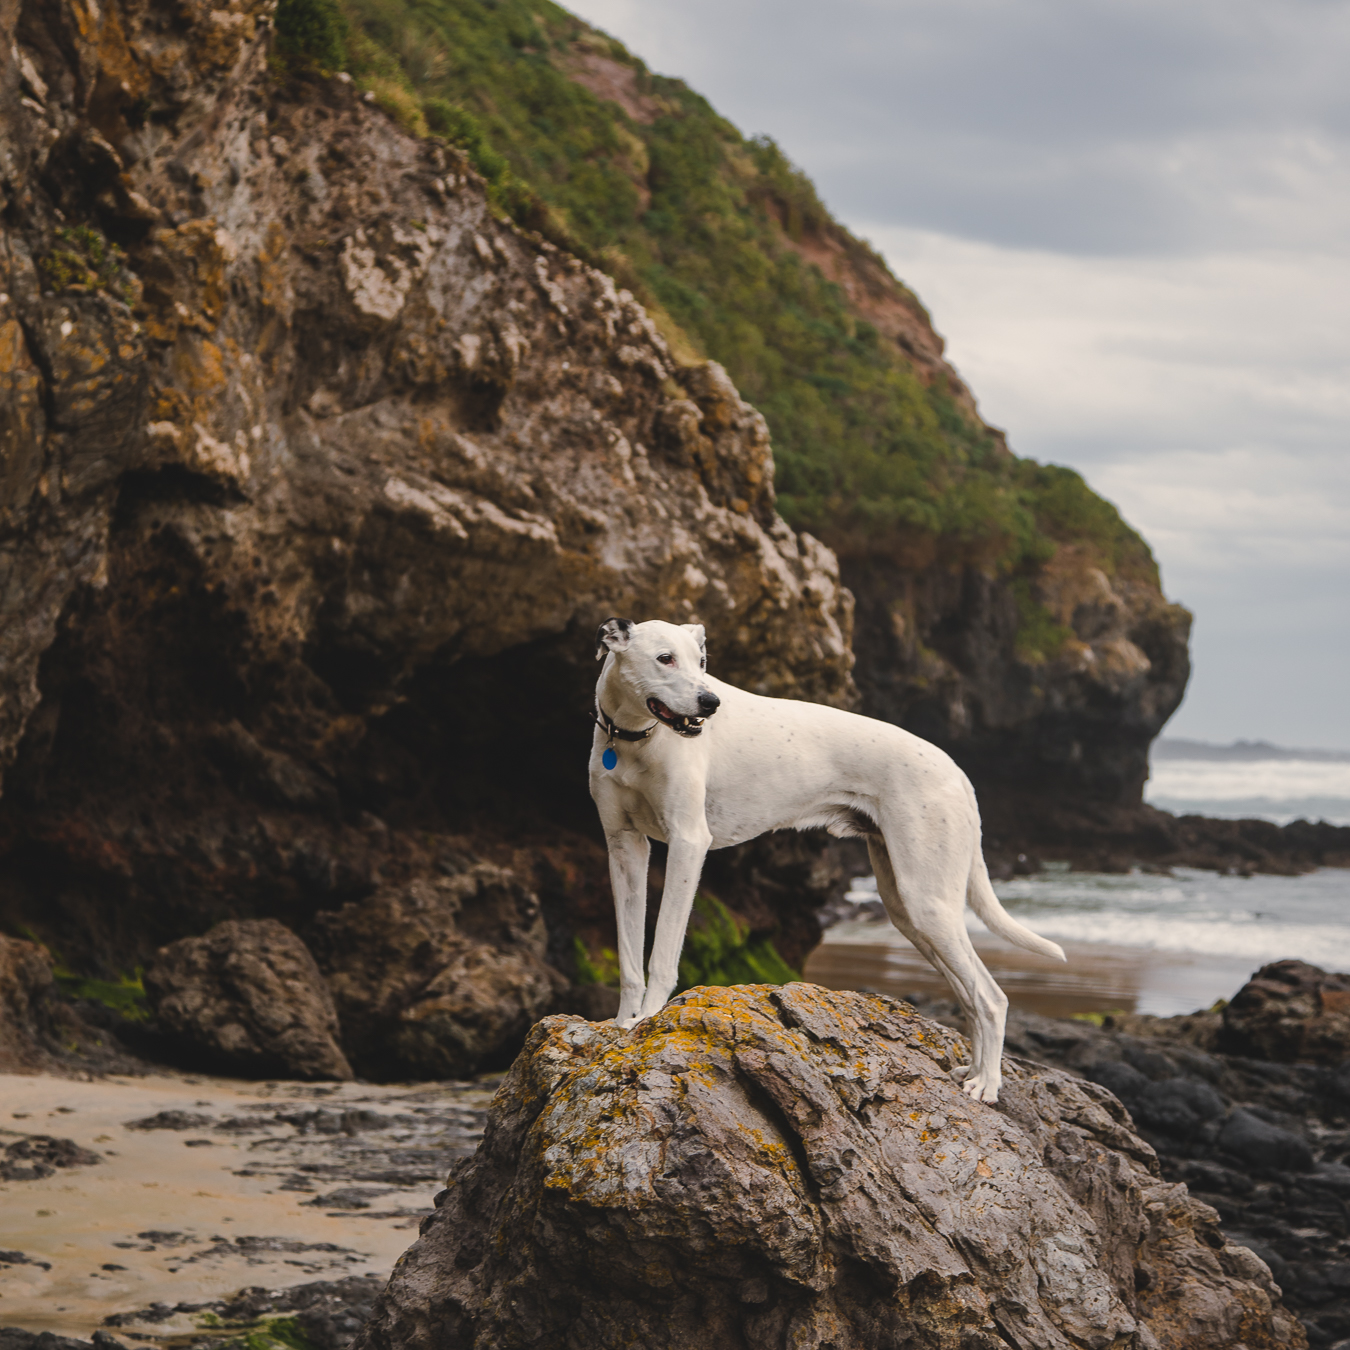 Fritz the greyhound on a beach walk